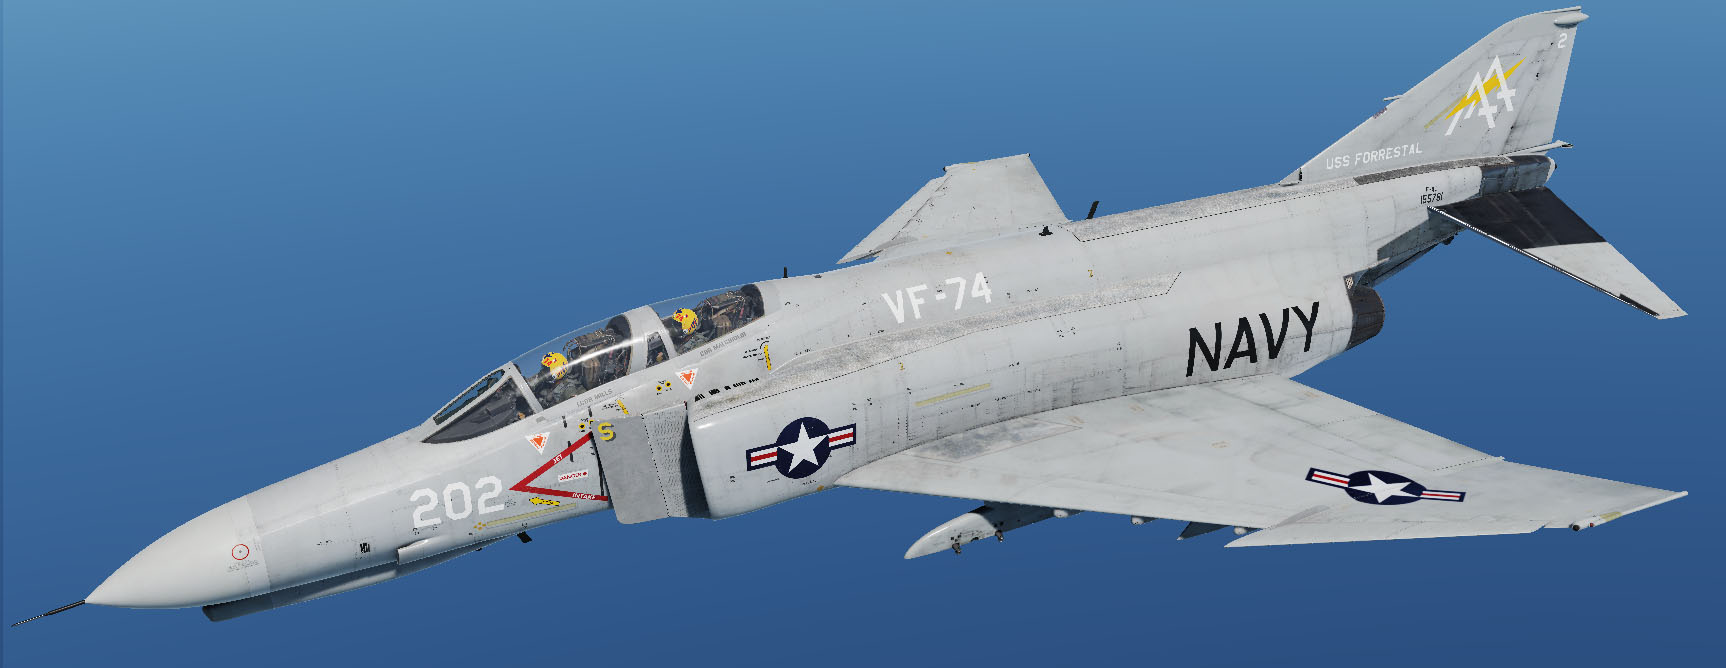 vf-74 Be-Devilers